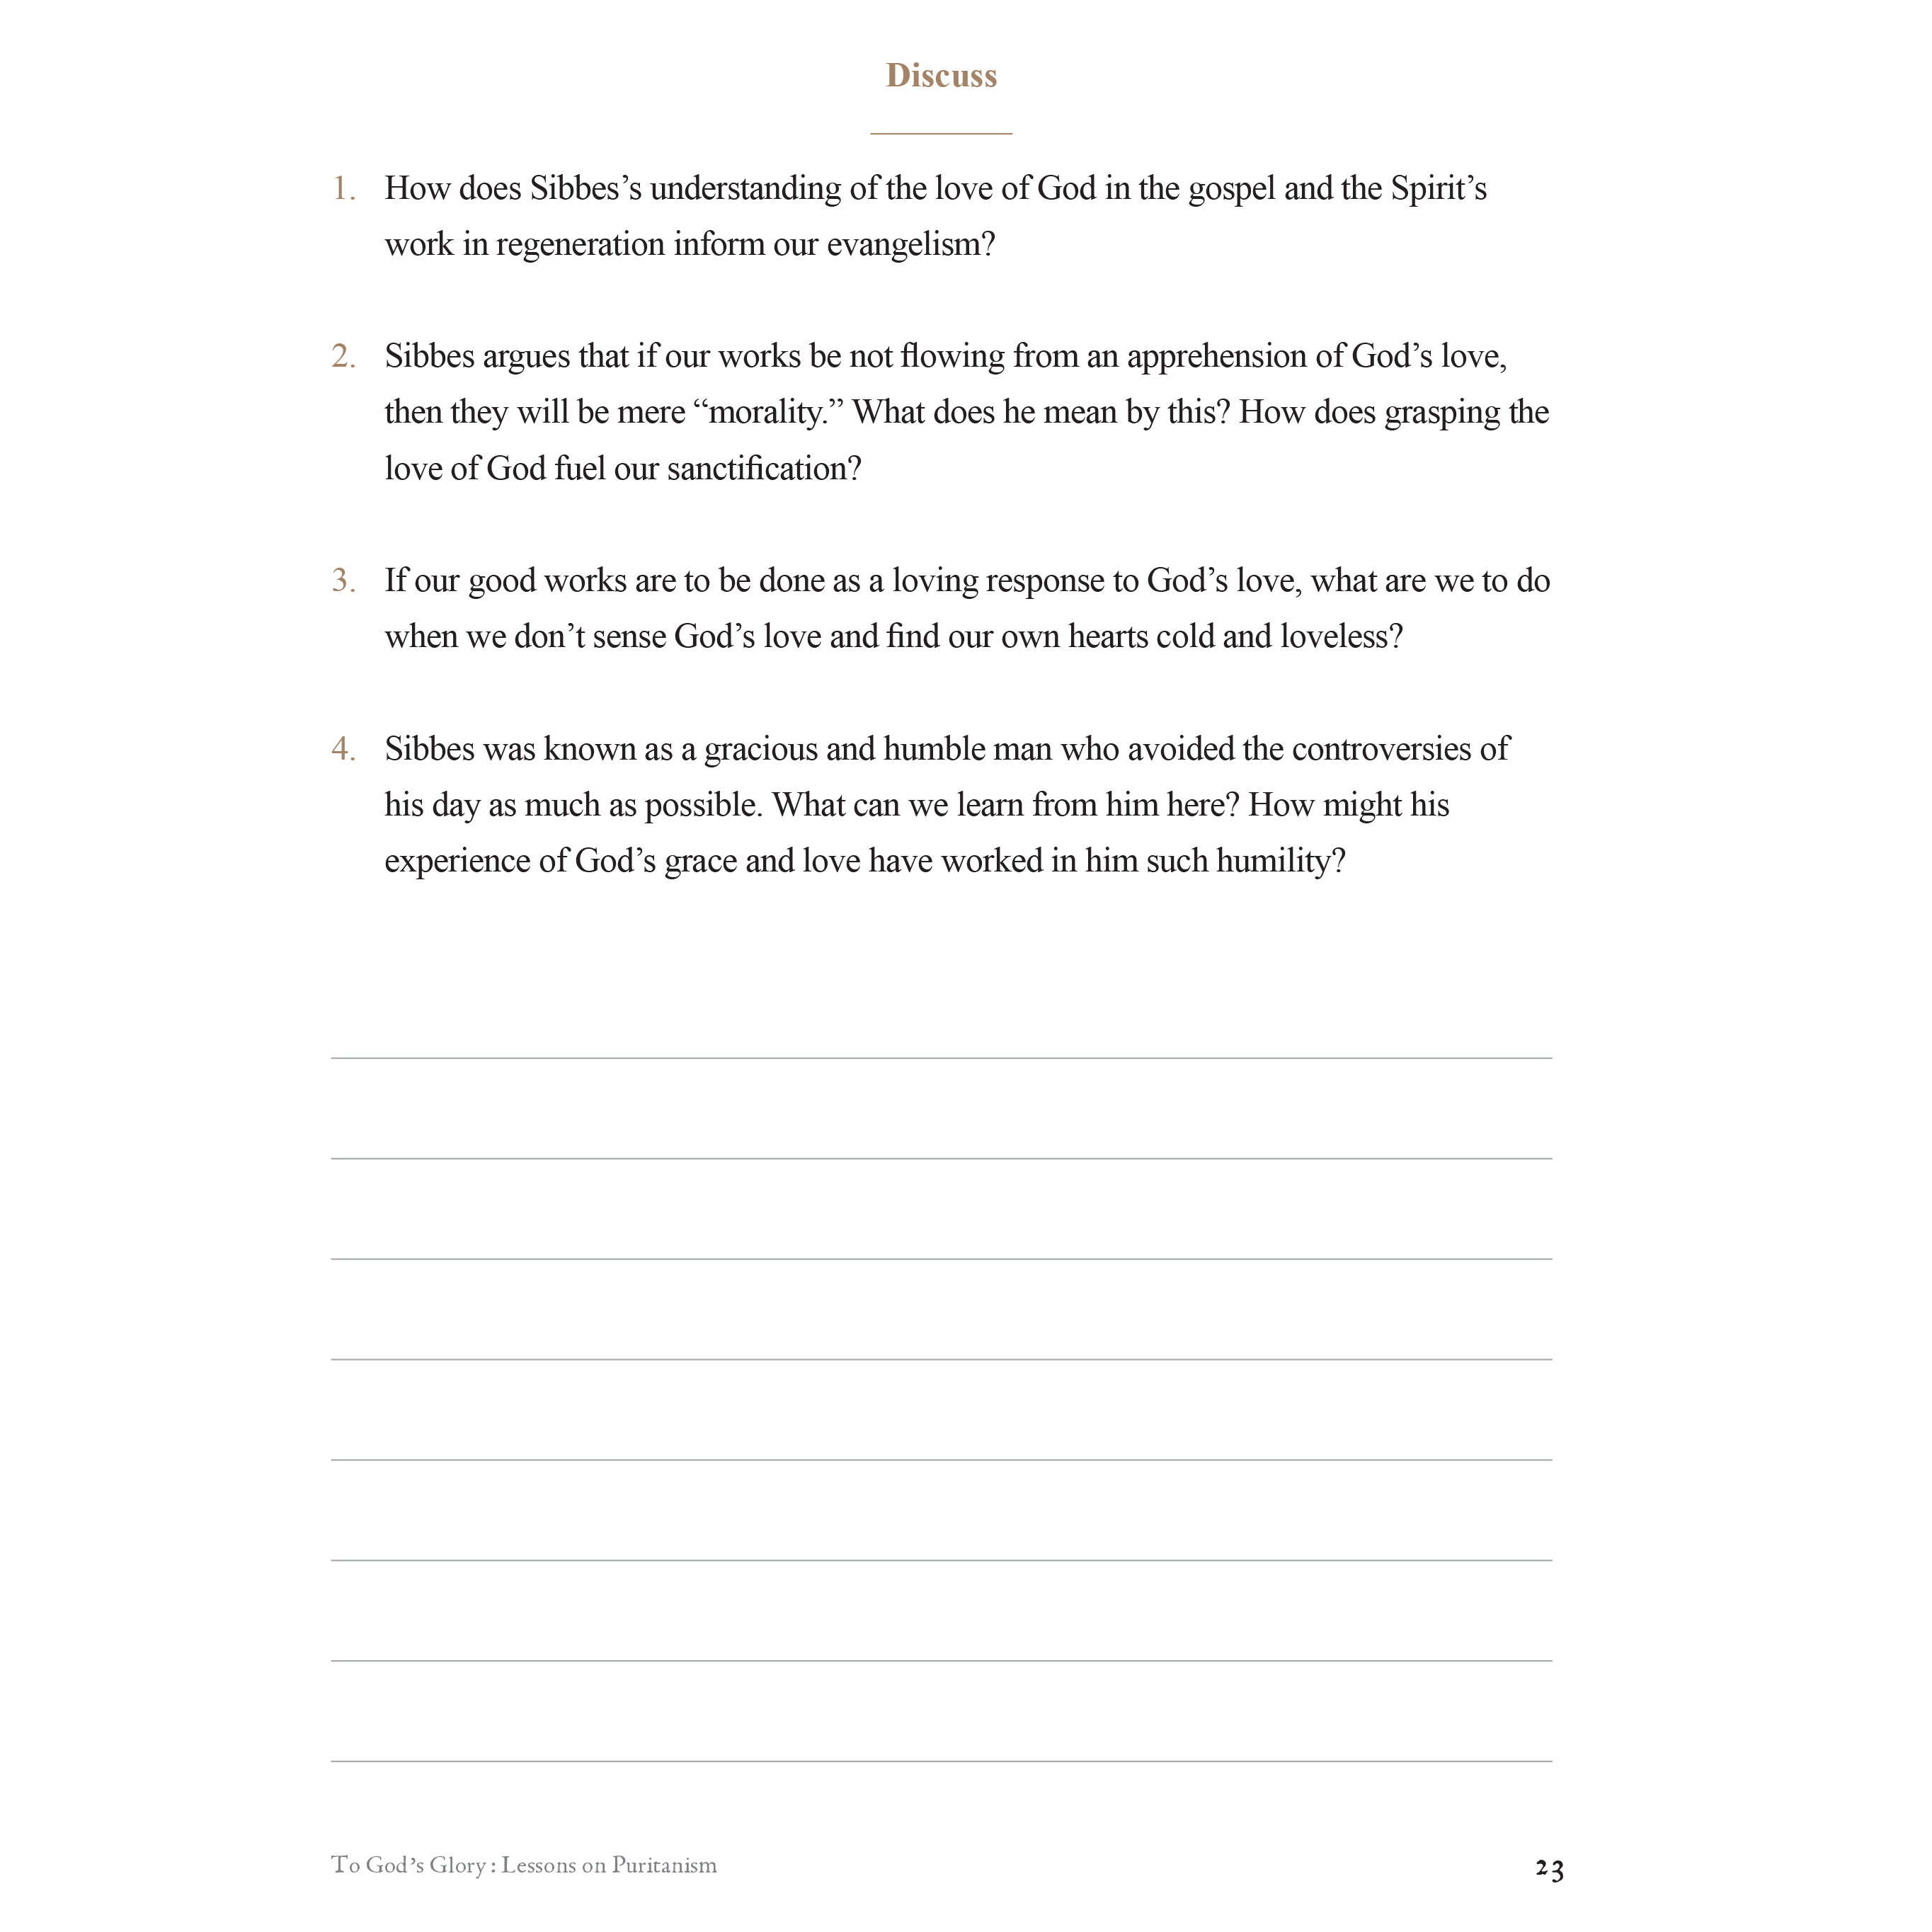 PURITAN Workbook | To God's Glory: Lessons on Puritanism - 10 Workbooks